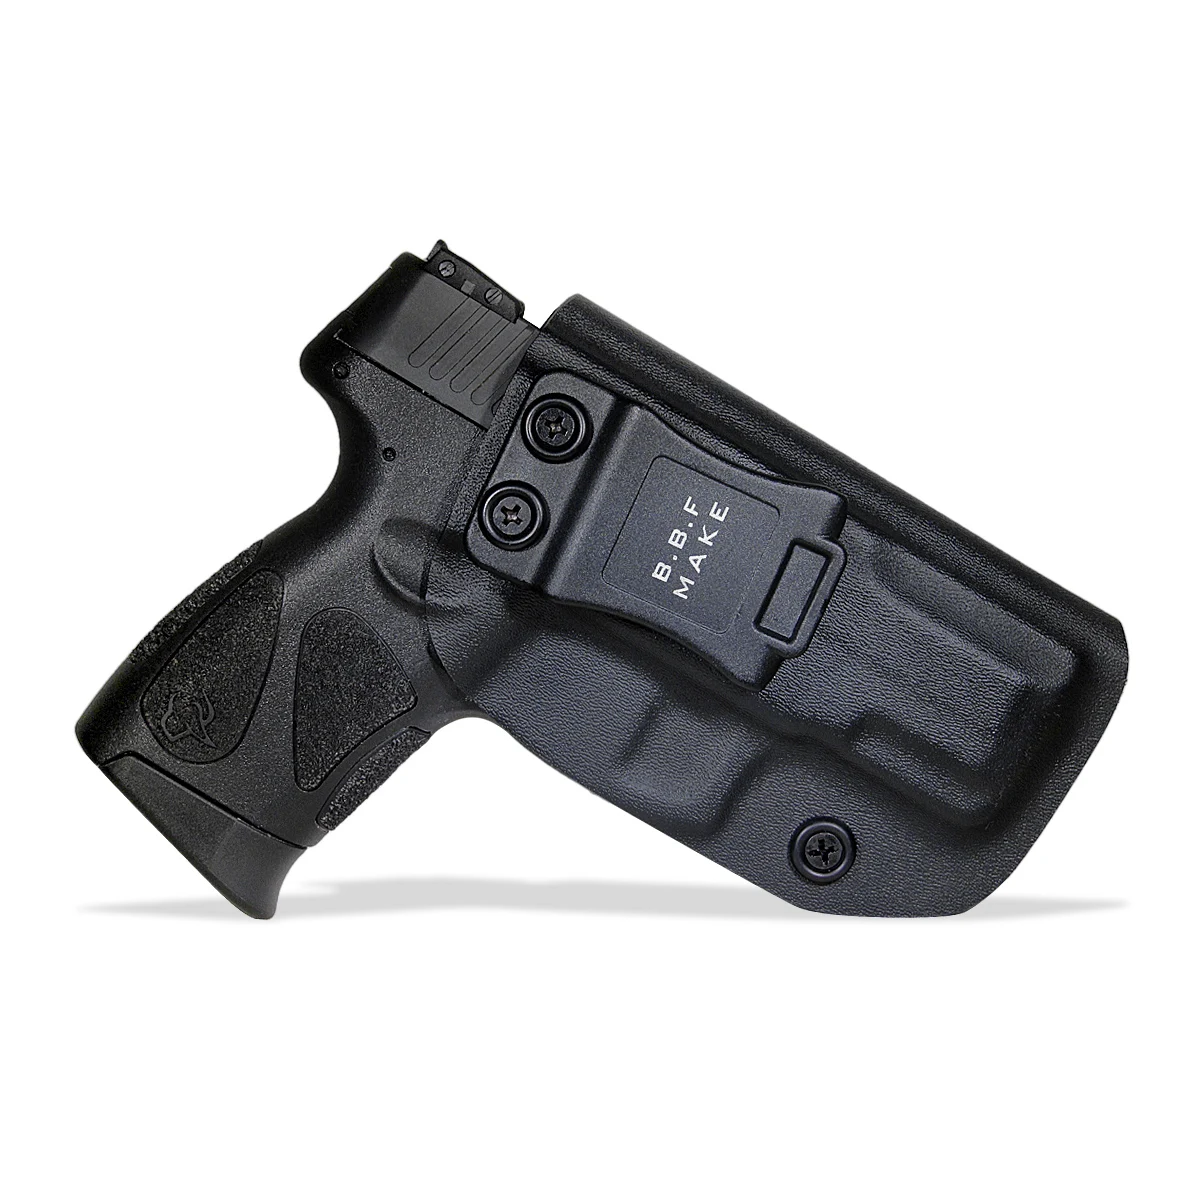 BBF Make IWB KYDEX кобура для пистолета подходит: Таурус PT111 G2C/PT140 чехол для пистолета внутри Скрытая сумка для переноски пистолета аксессуары сумки - Цвет: PT111 Black Right